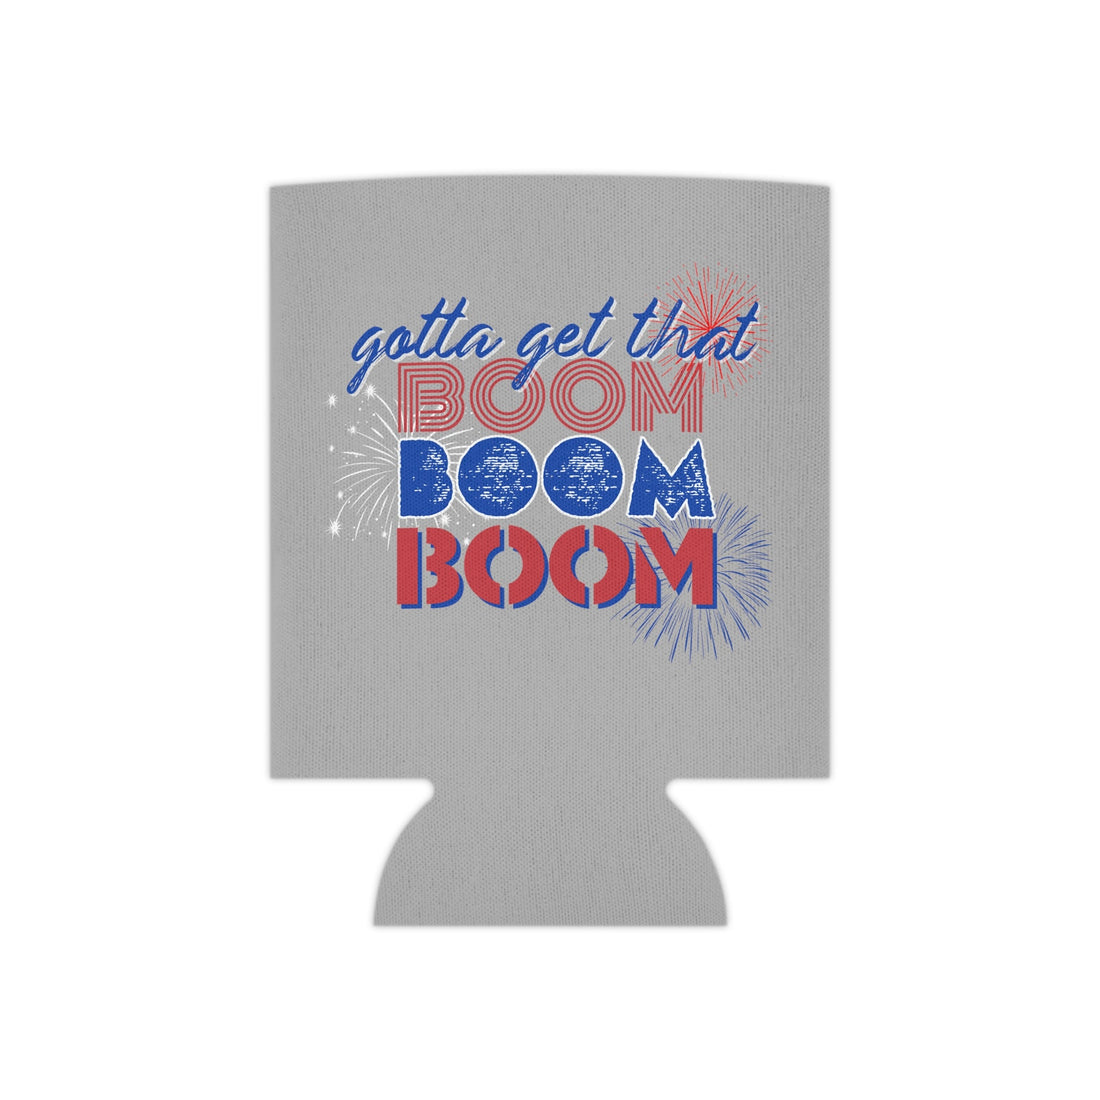 Boom Boom Boom Can Cooler Koozie - Accessories - Positively Sassy - Boom Boom Boom Can Cooler Koozie